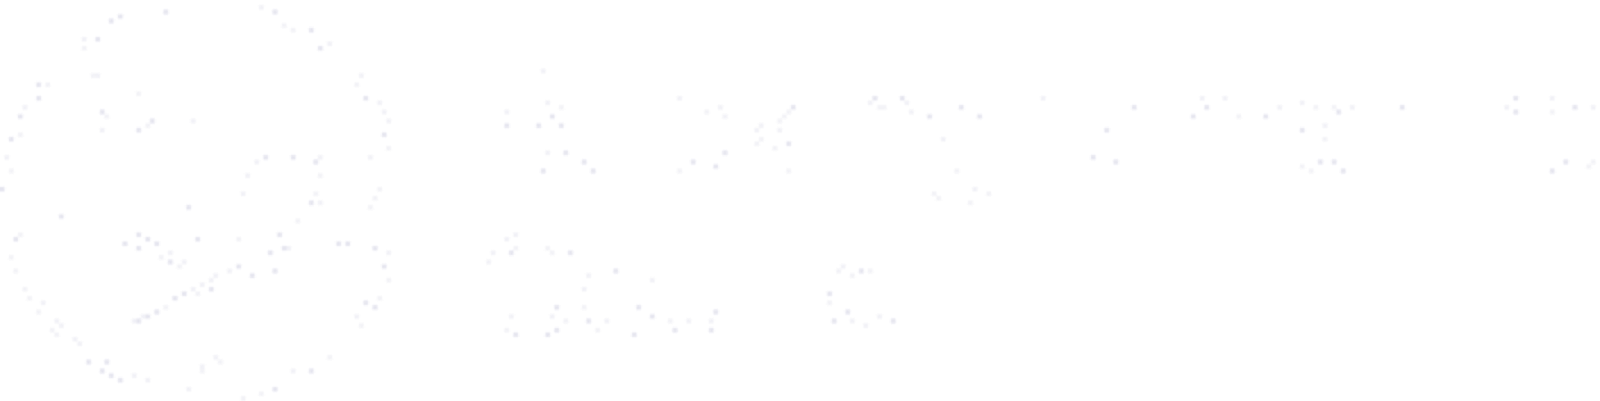 Buckinghamshire council logo bg remove